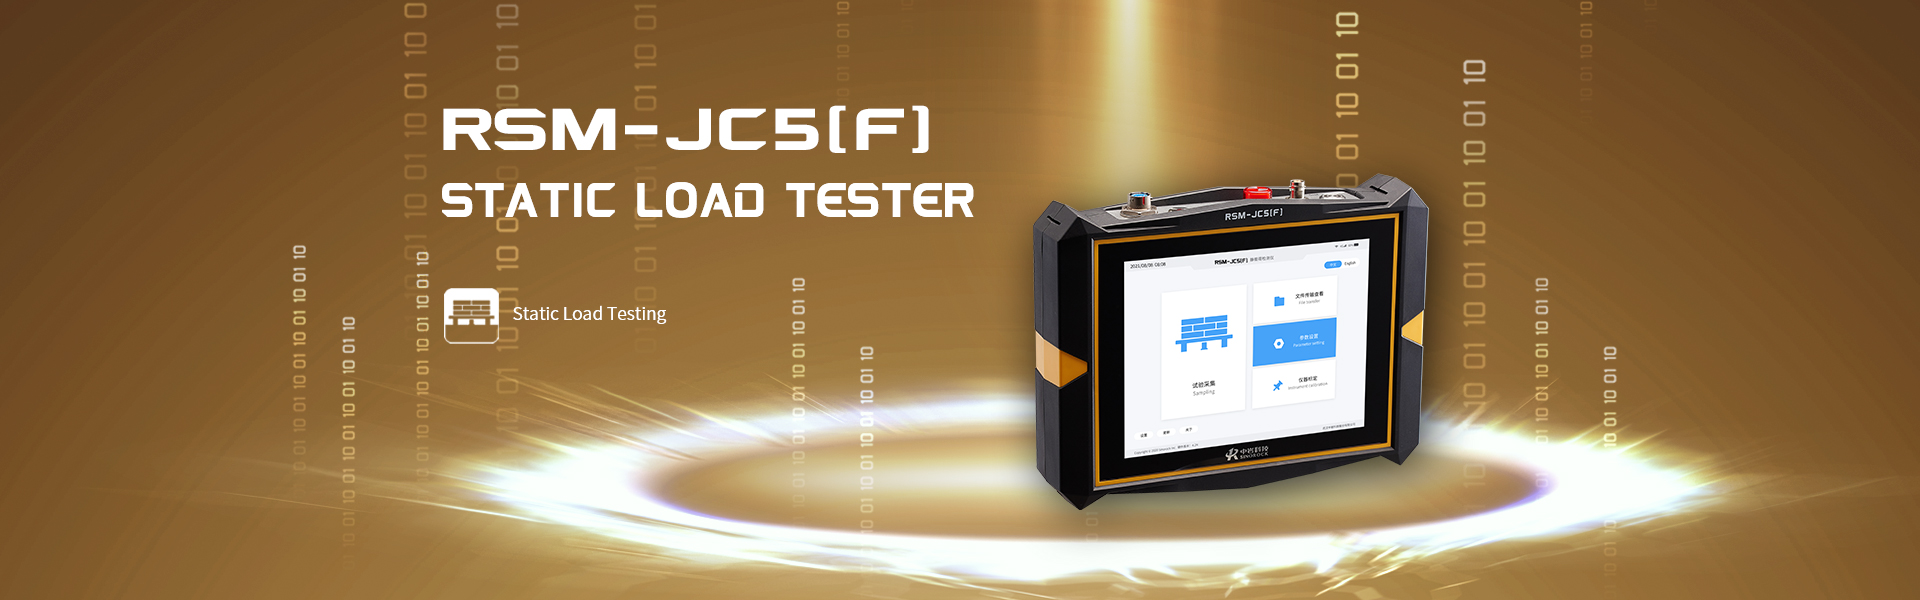 RSM-JC5 (F) Static Load Tester